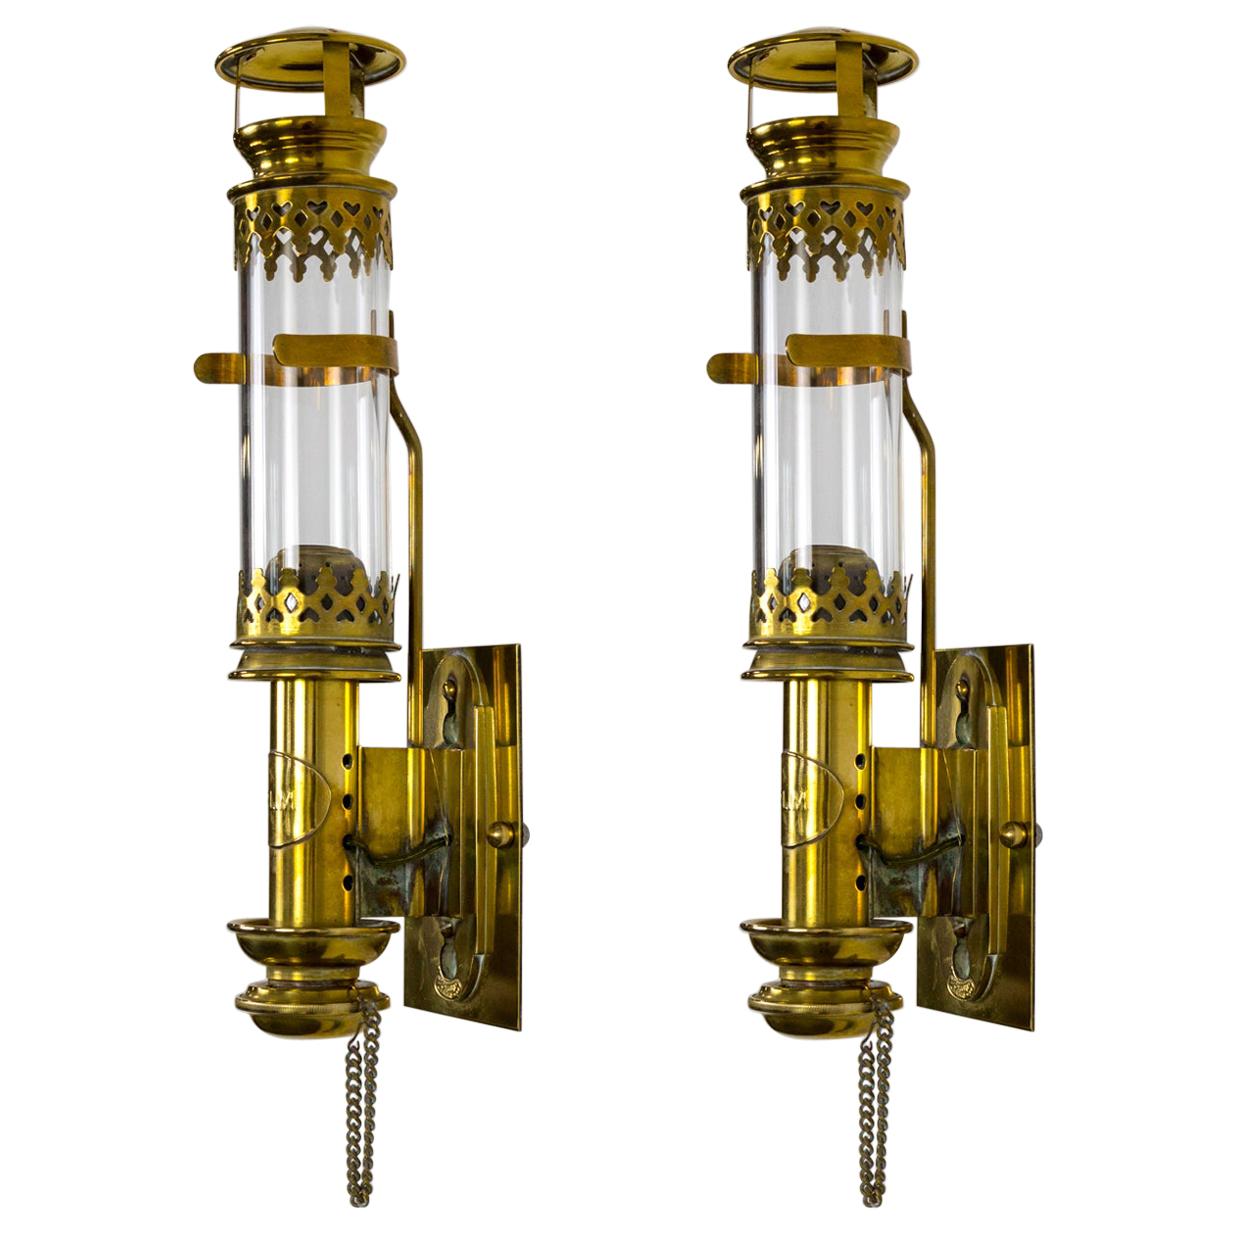 Original circa 1900 "PLM" Brass Railroad Lantern Sconces by Poyard Paris, Pair